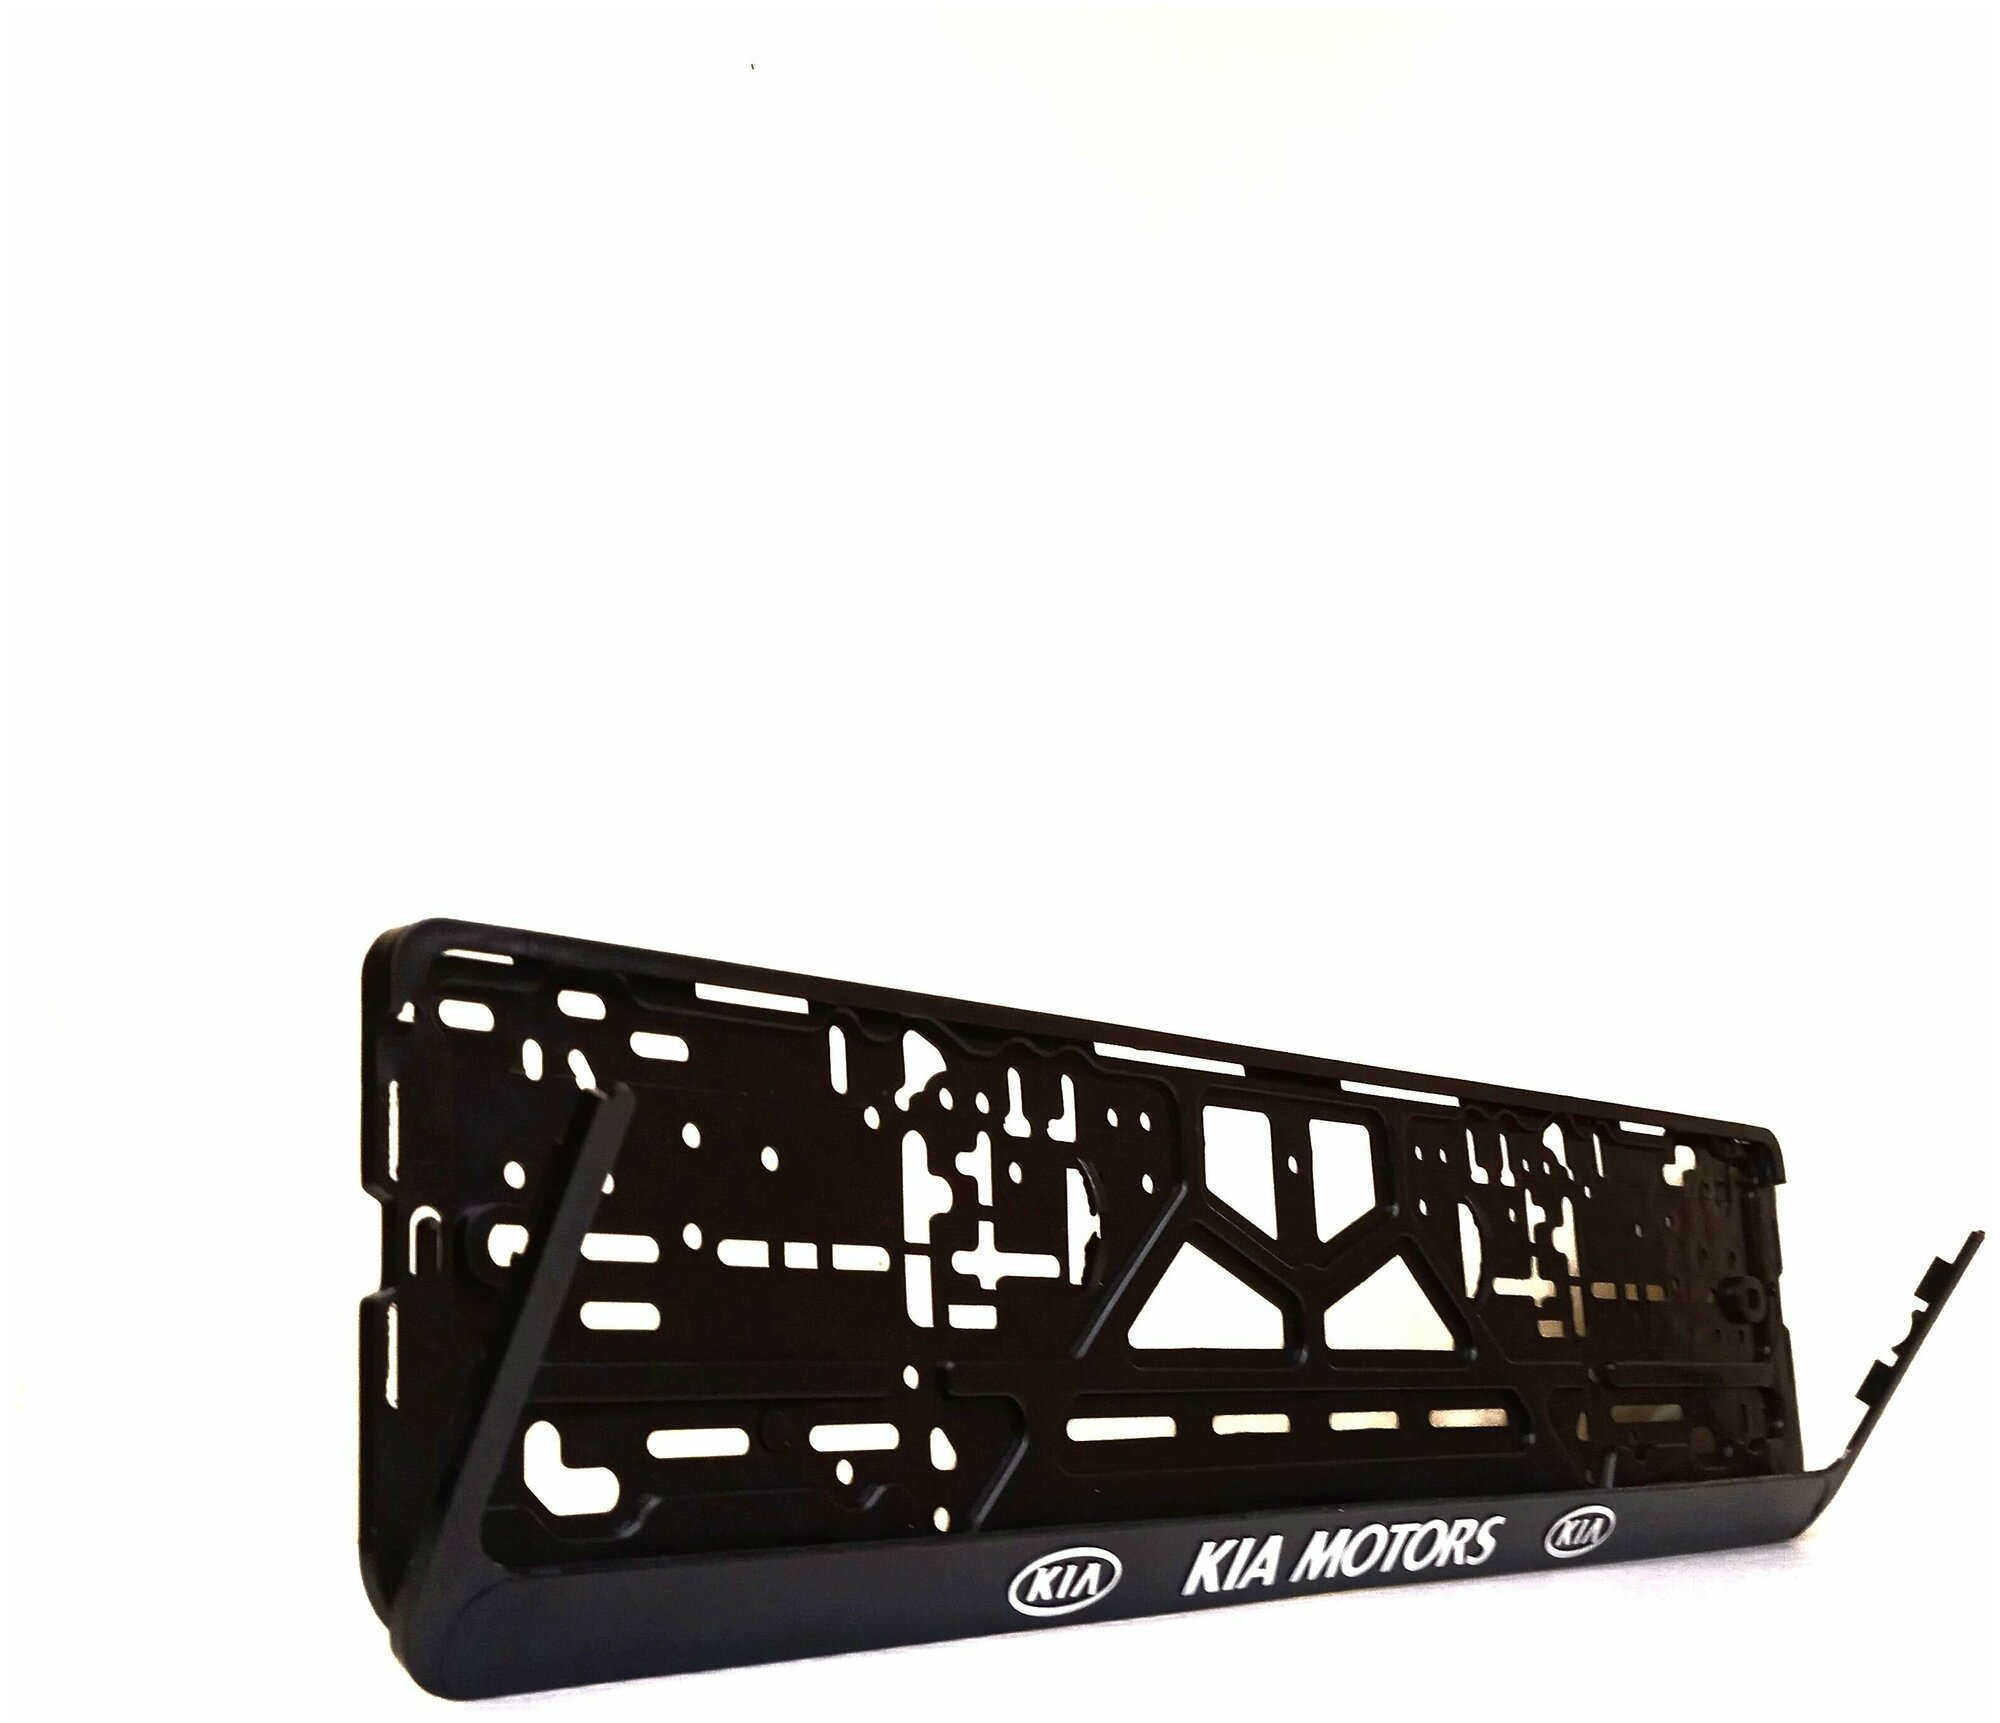 Рамка номерного знака для автомобиля "Kia motors" пластиковая, рамка-книжка 2 шт